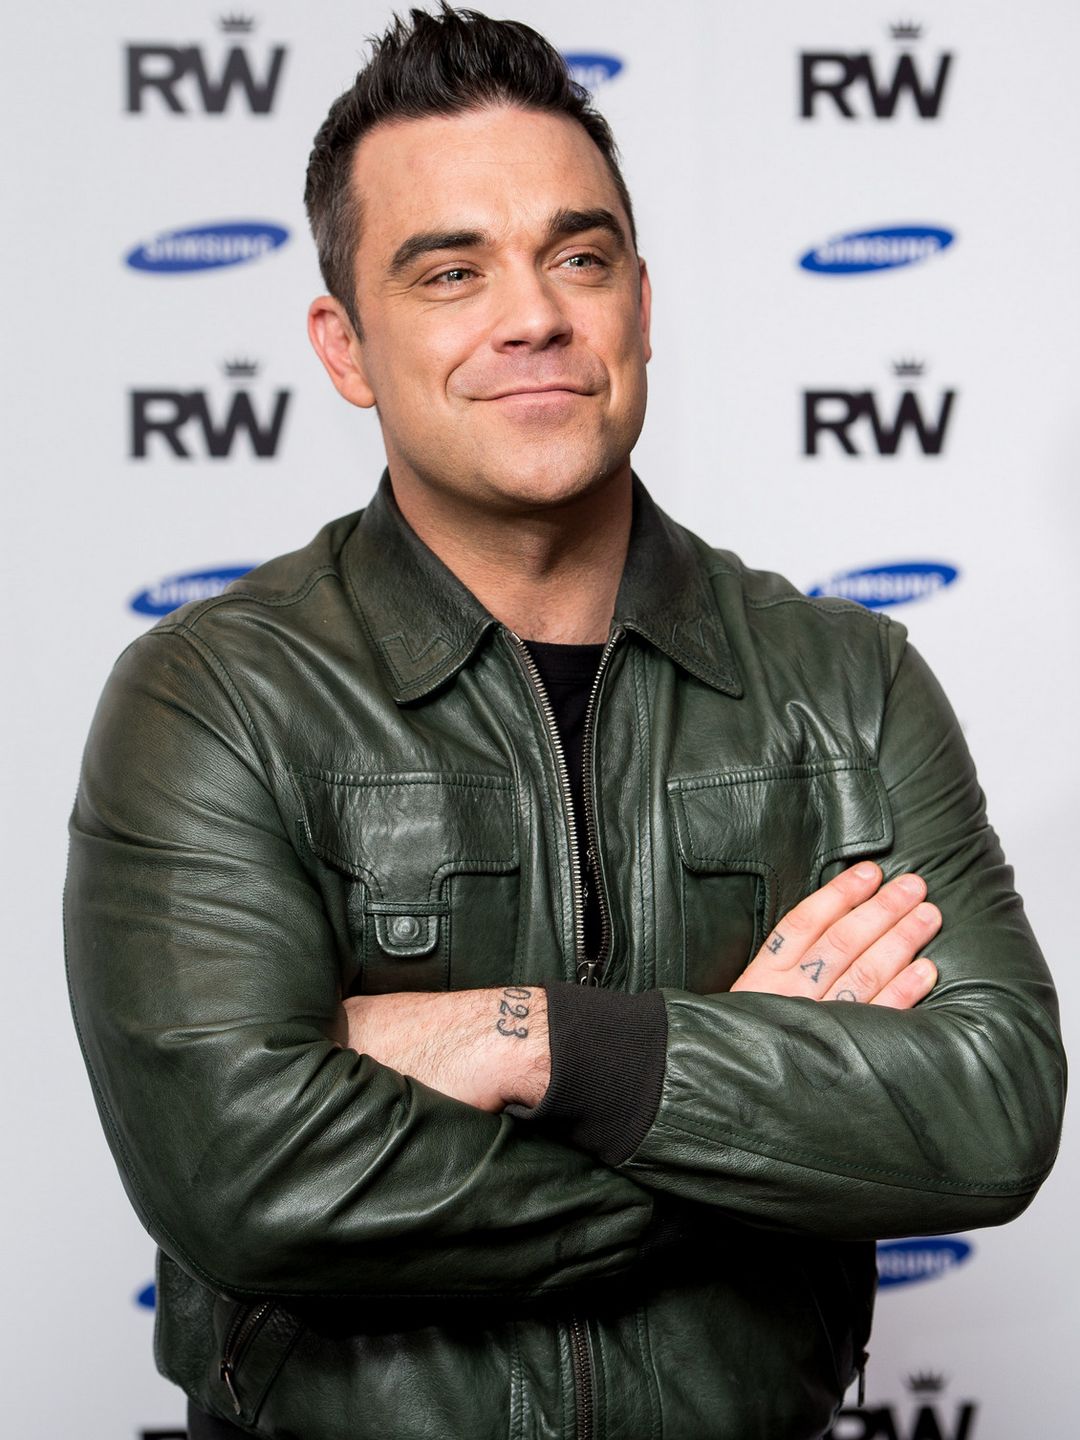 Robbie Williams ethnicity